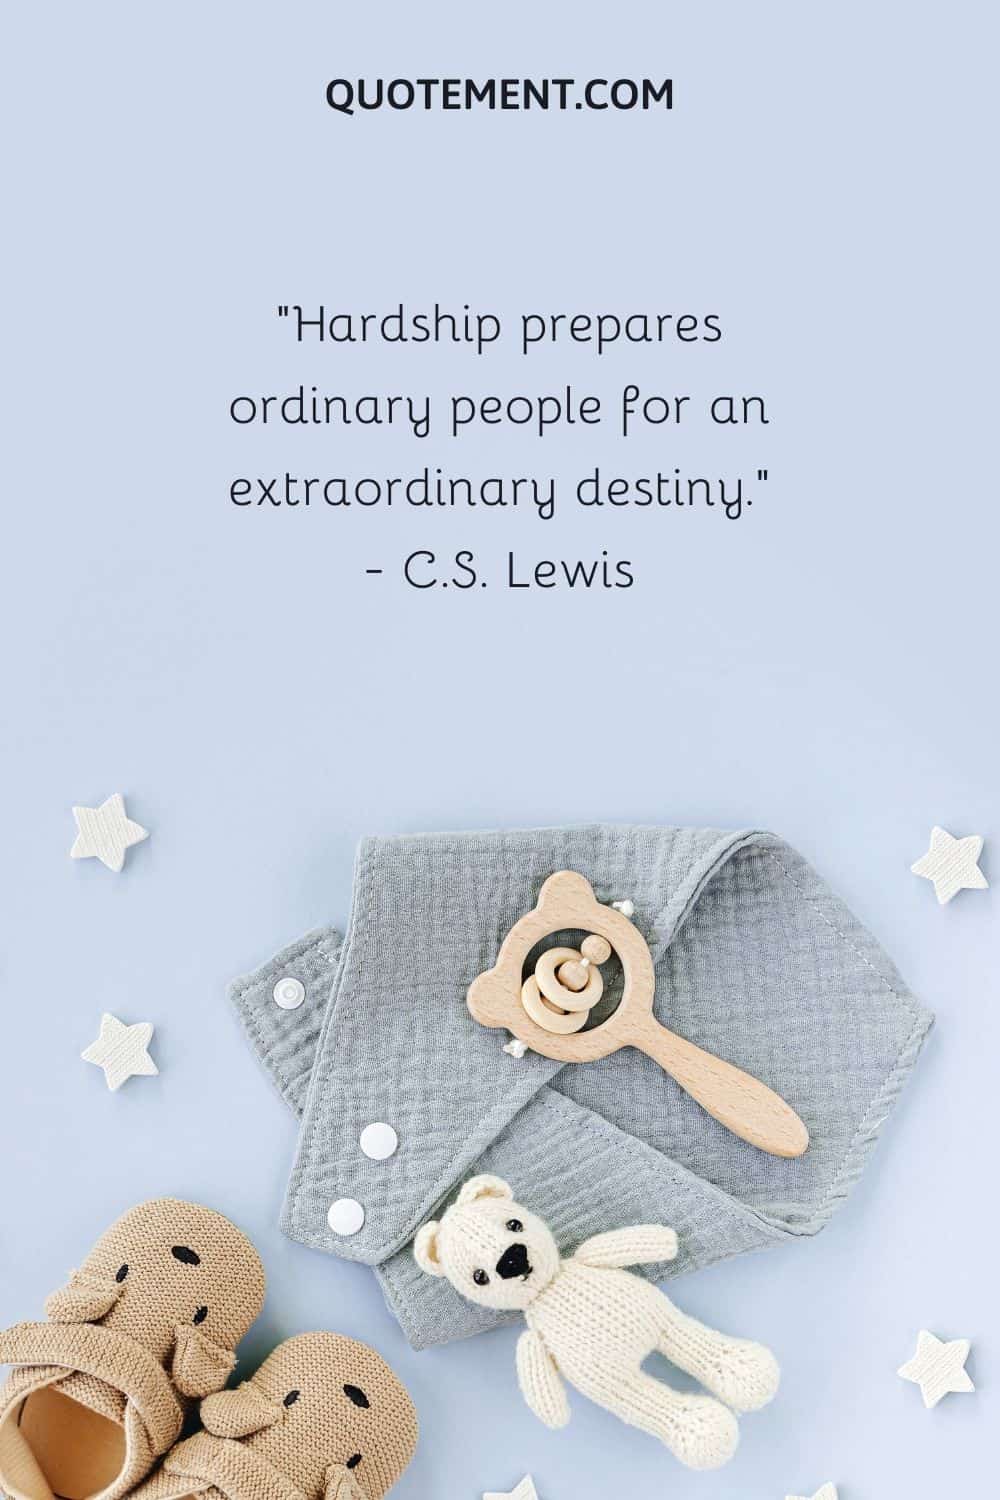 Hardship prepares ordinary people for an extraordinary destiny.